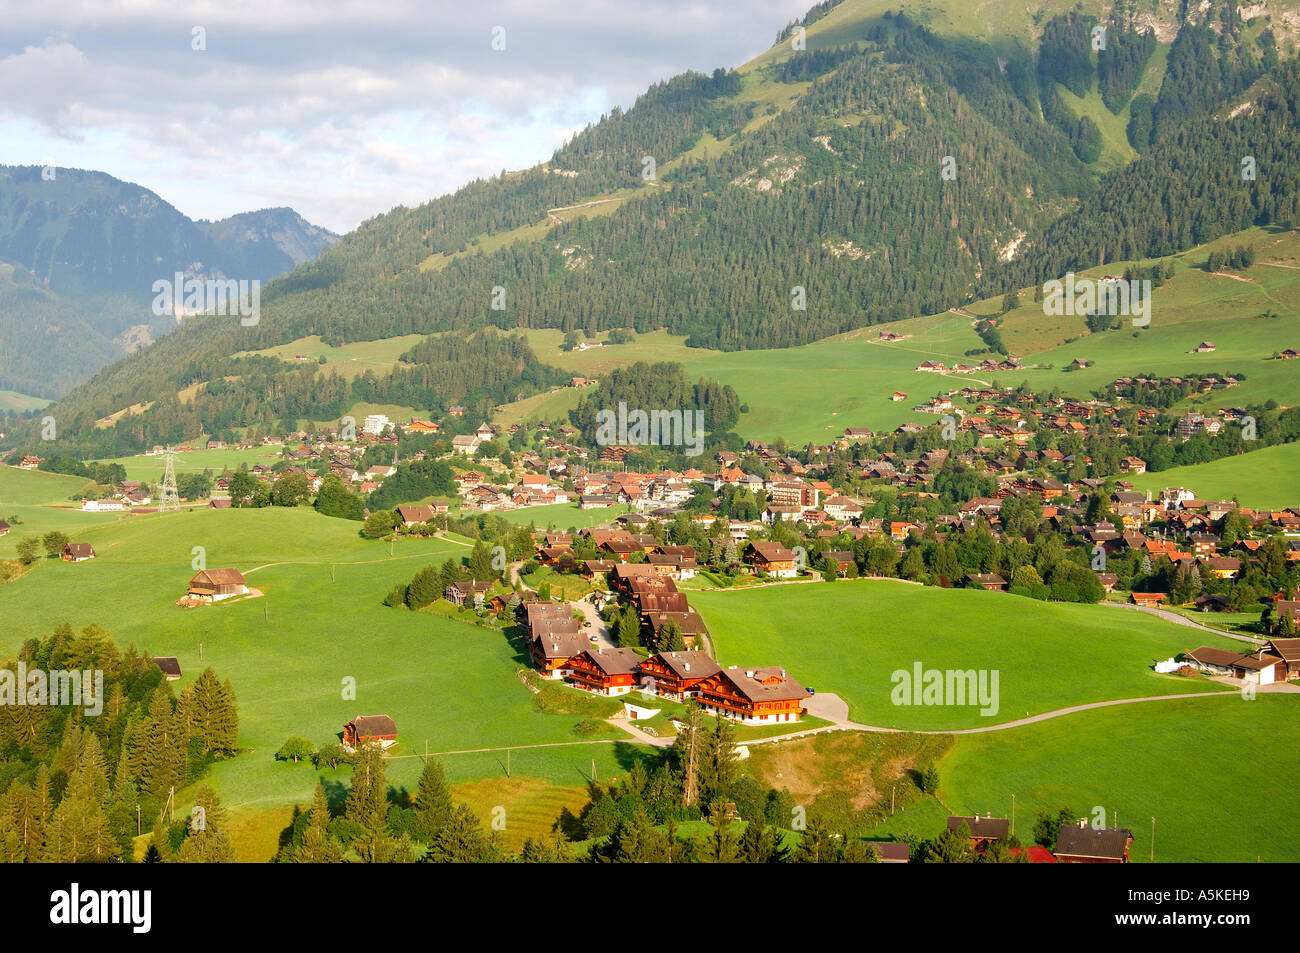 Chateau d ' Oex Valleés du Pays d Enhaut im Berner Oberland Luftbild Schweiz Stockfoto